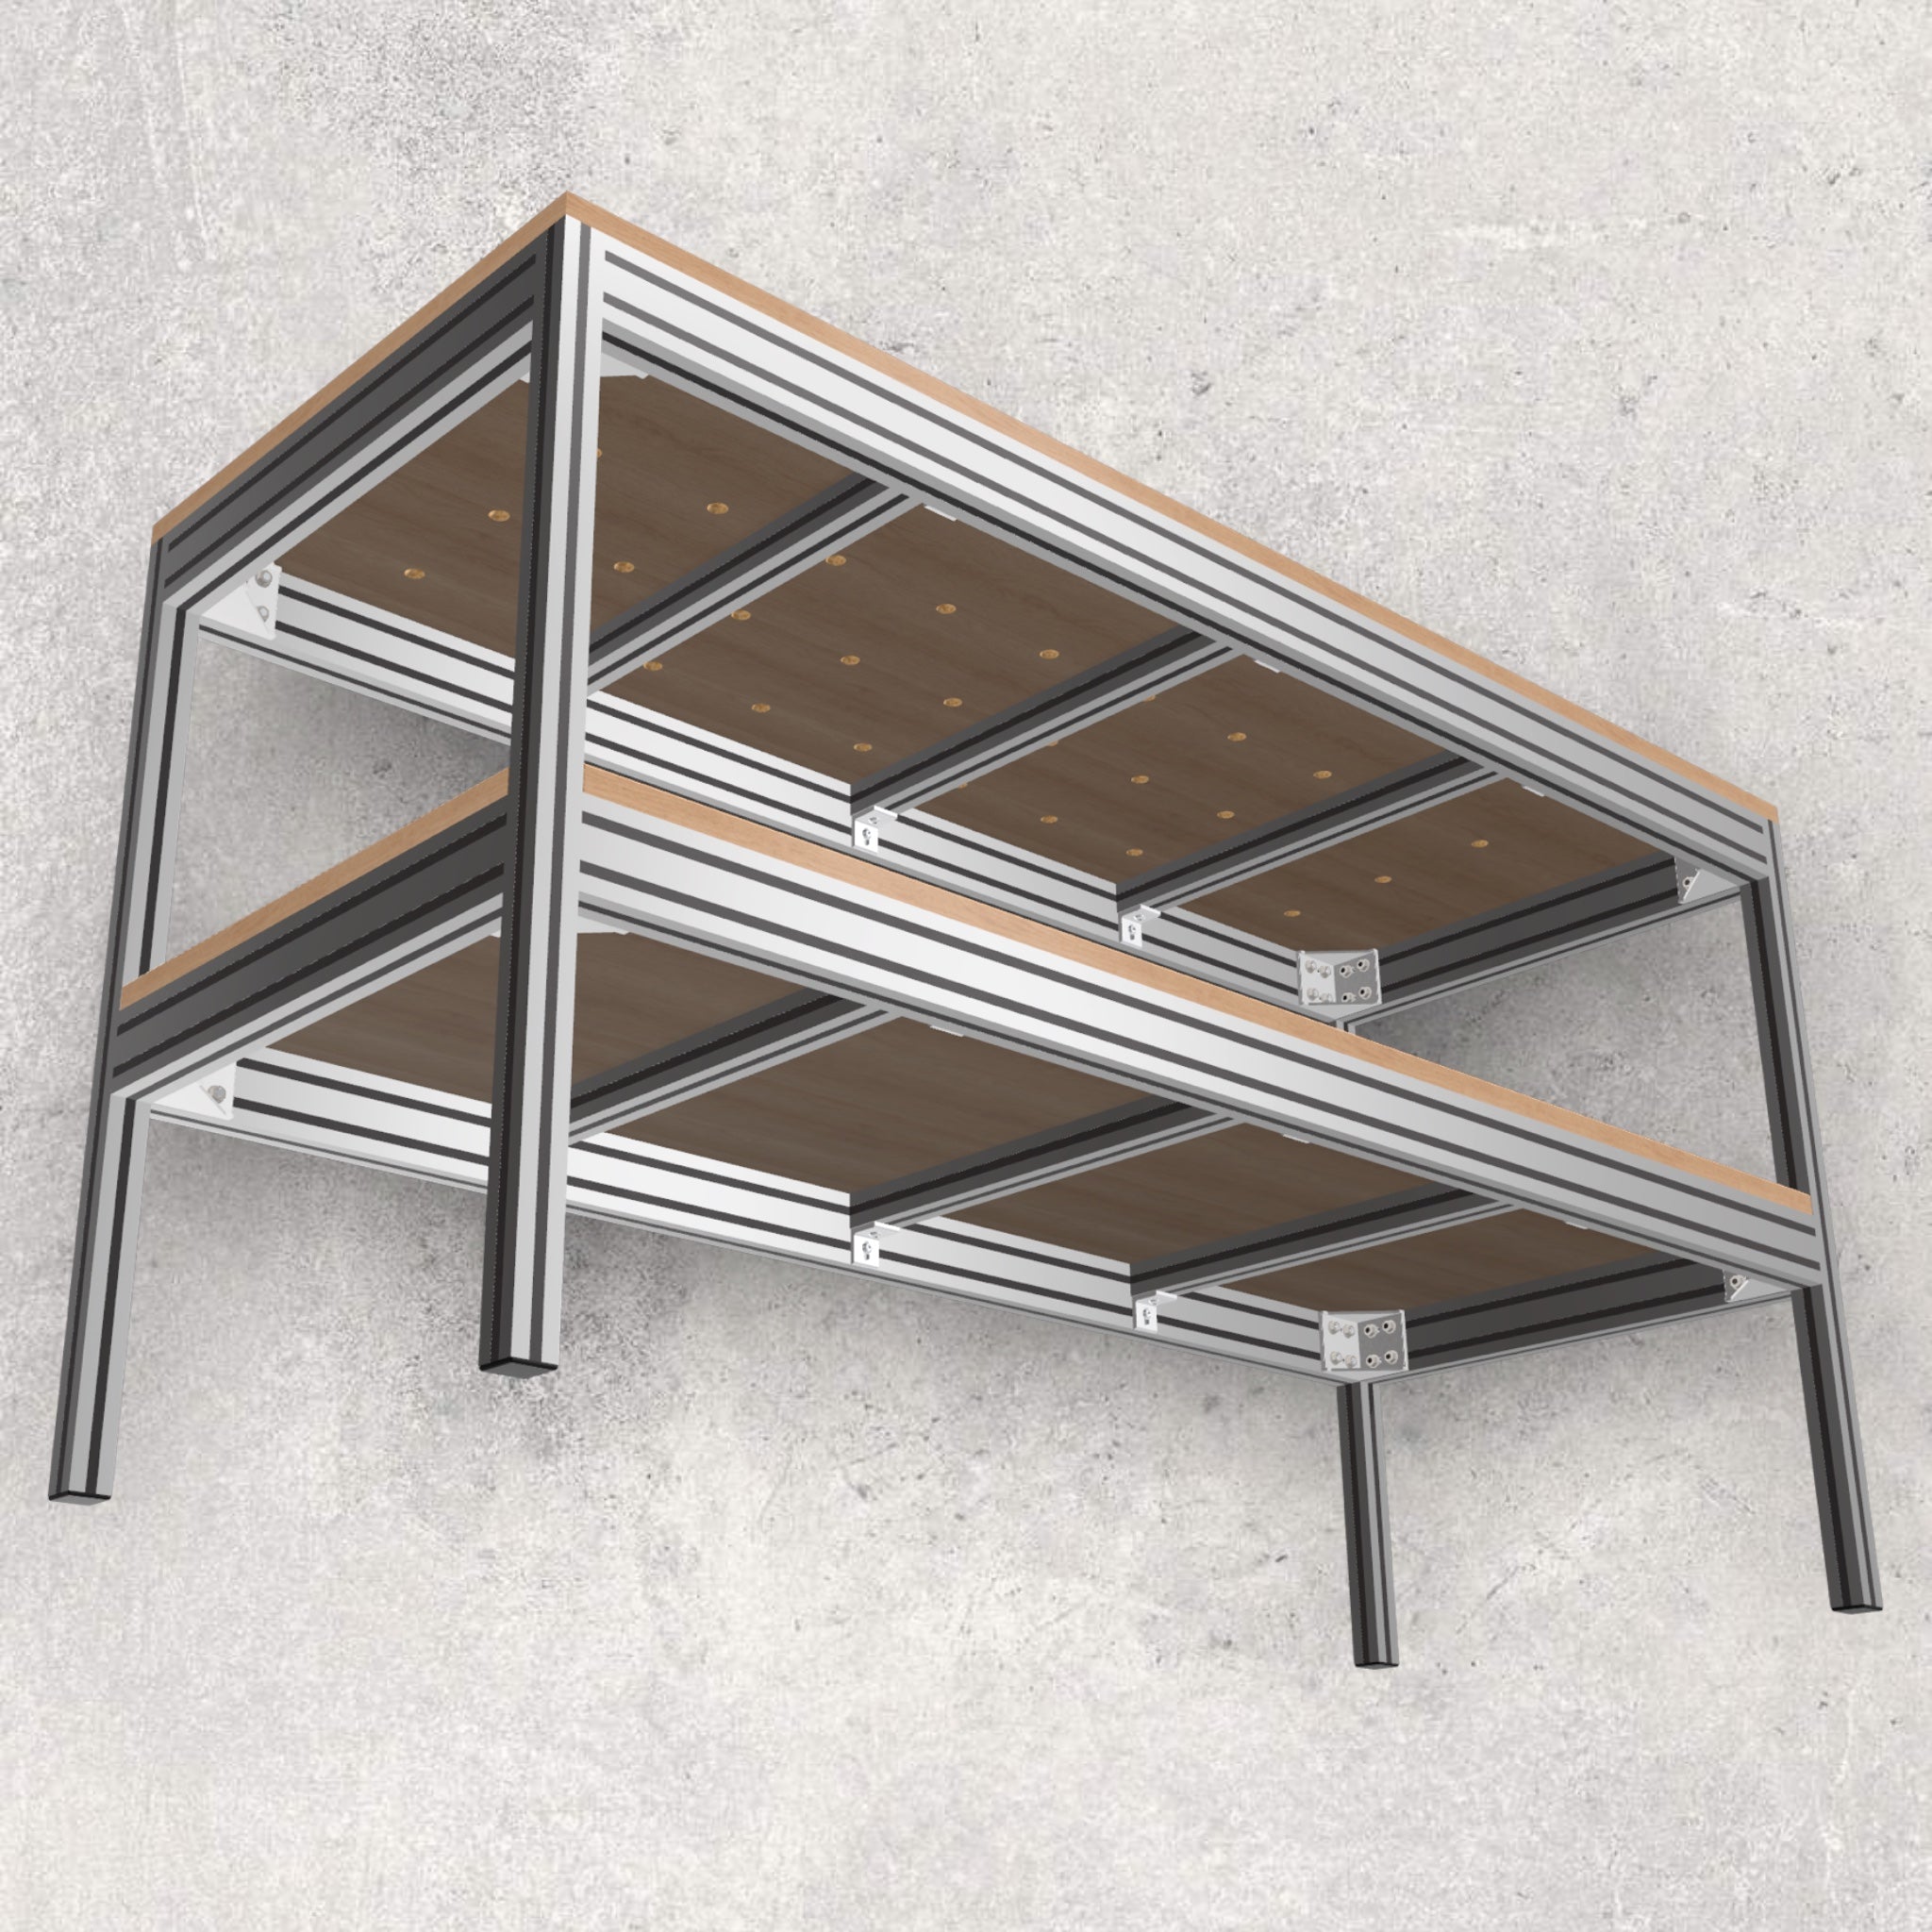 MFT Centerpiece Assembly Workbench (Digital Download) – The 